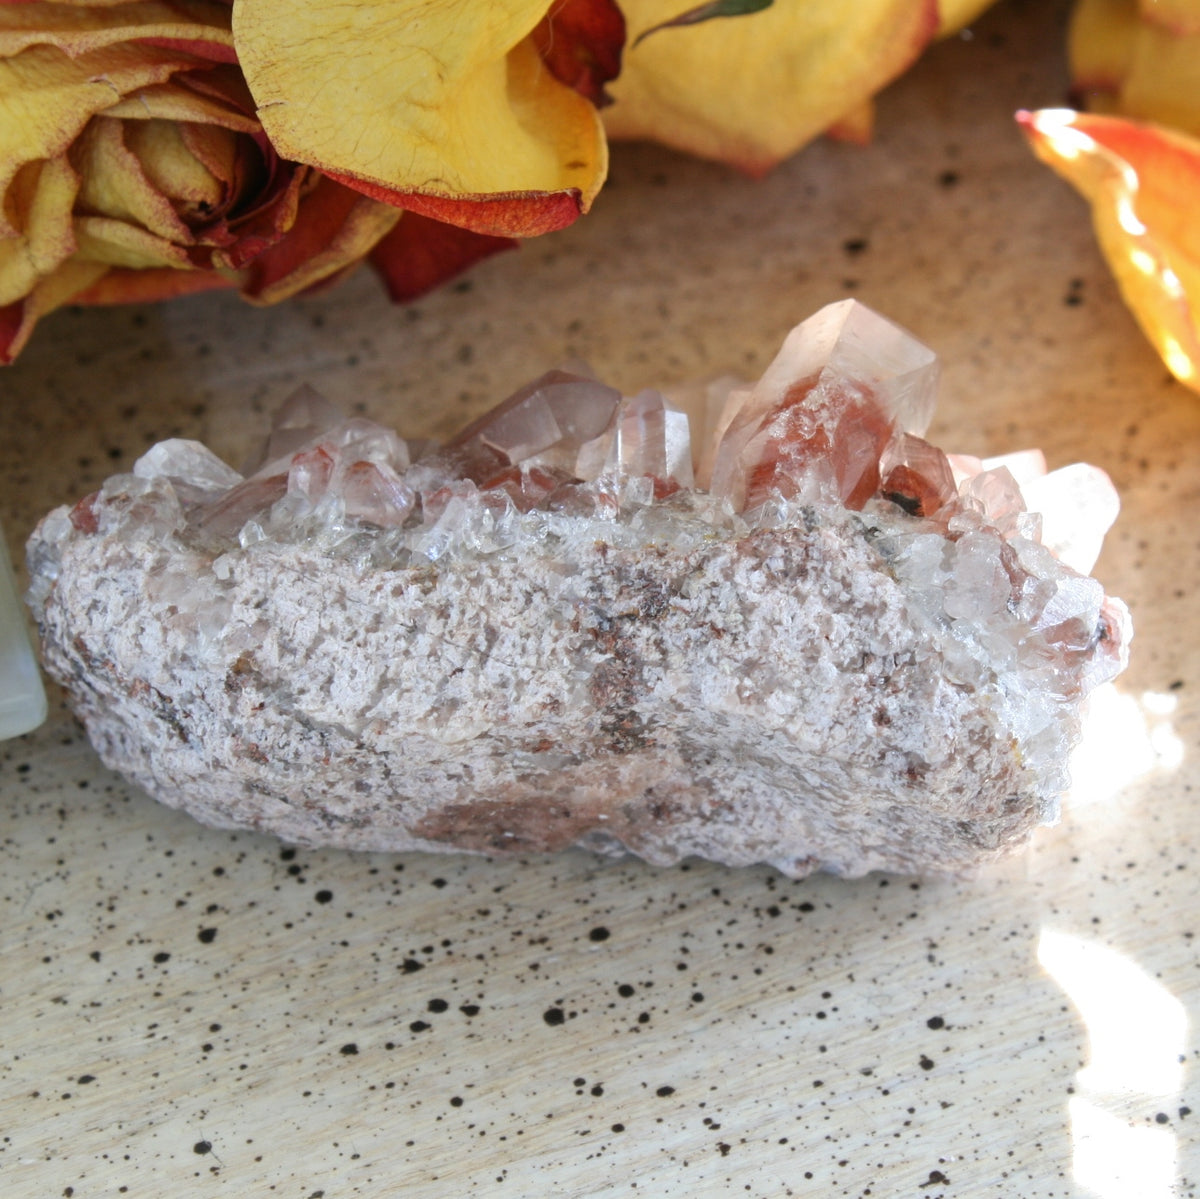 Orange River Quartz with Hematite Inclusions / Phantoms, Northern Cape, South Africa, 74.7 grams